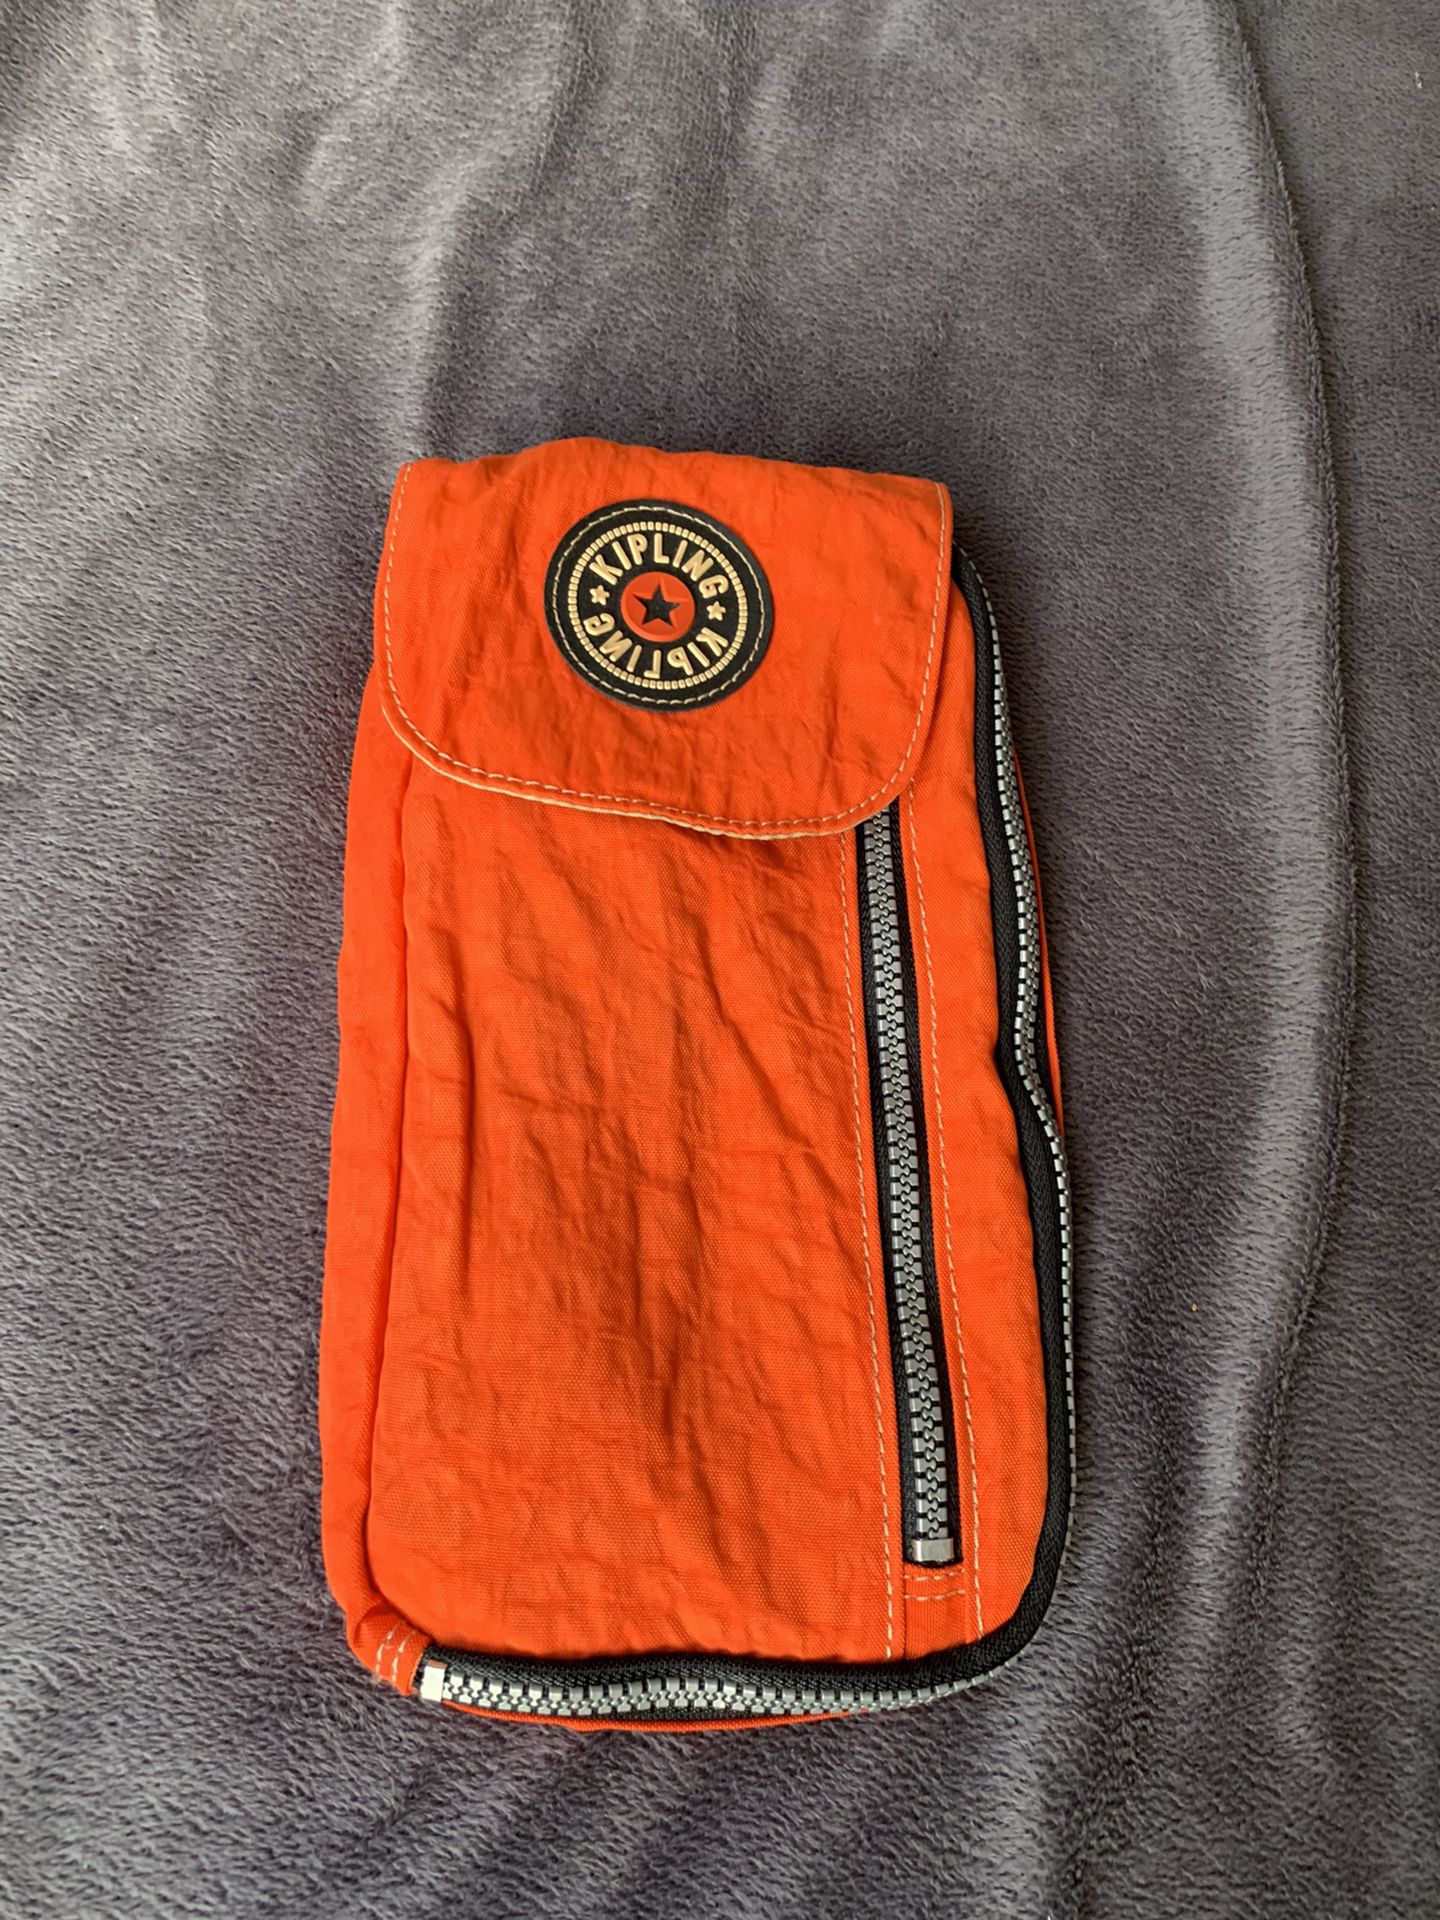 Kipling over the shoulder wallet purse, Small orange and black bag for multi purposes